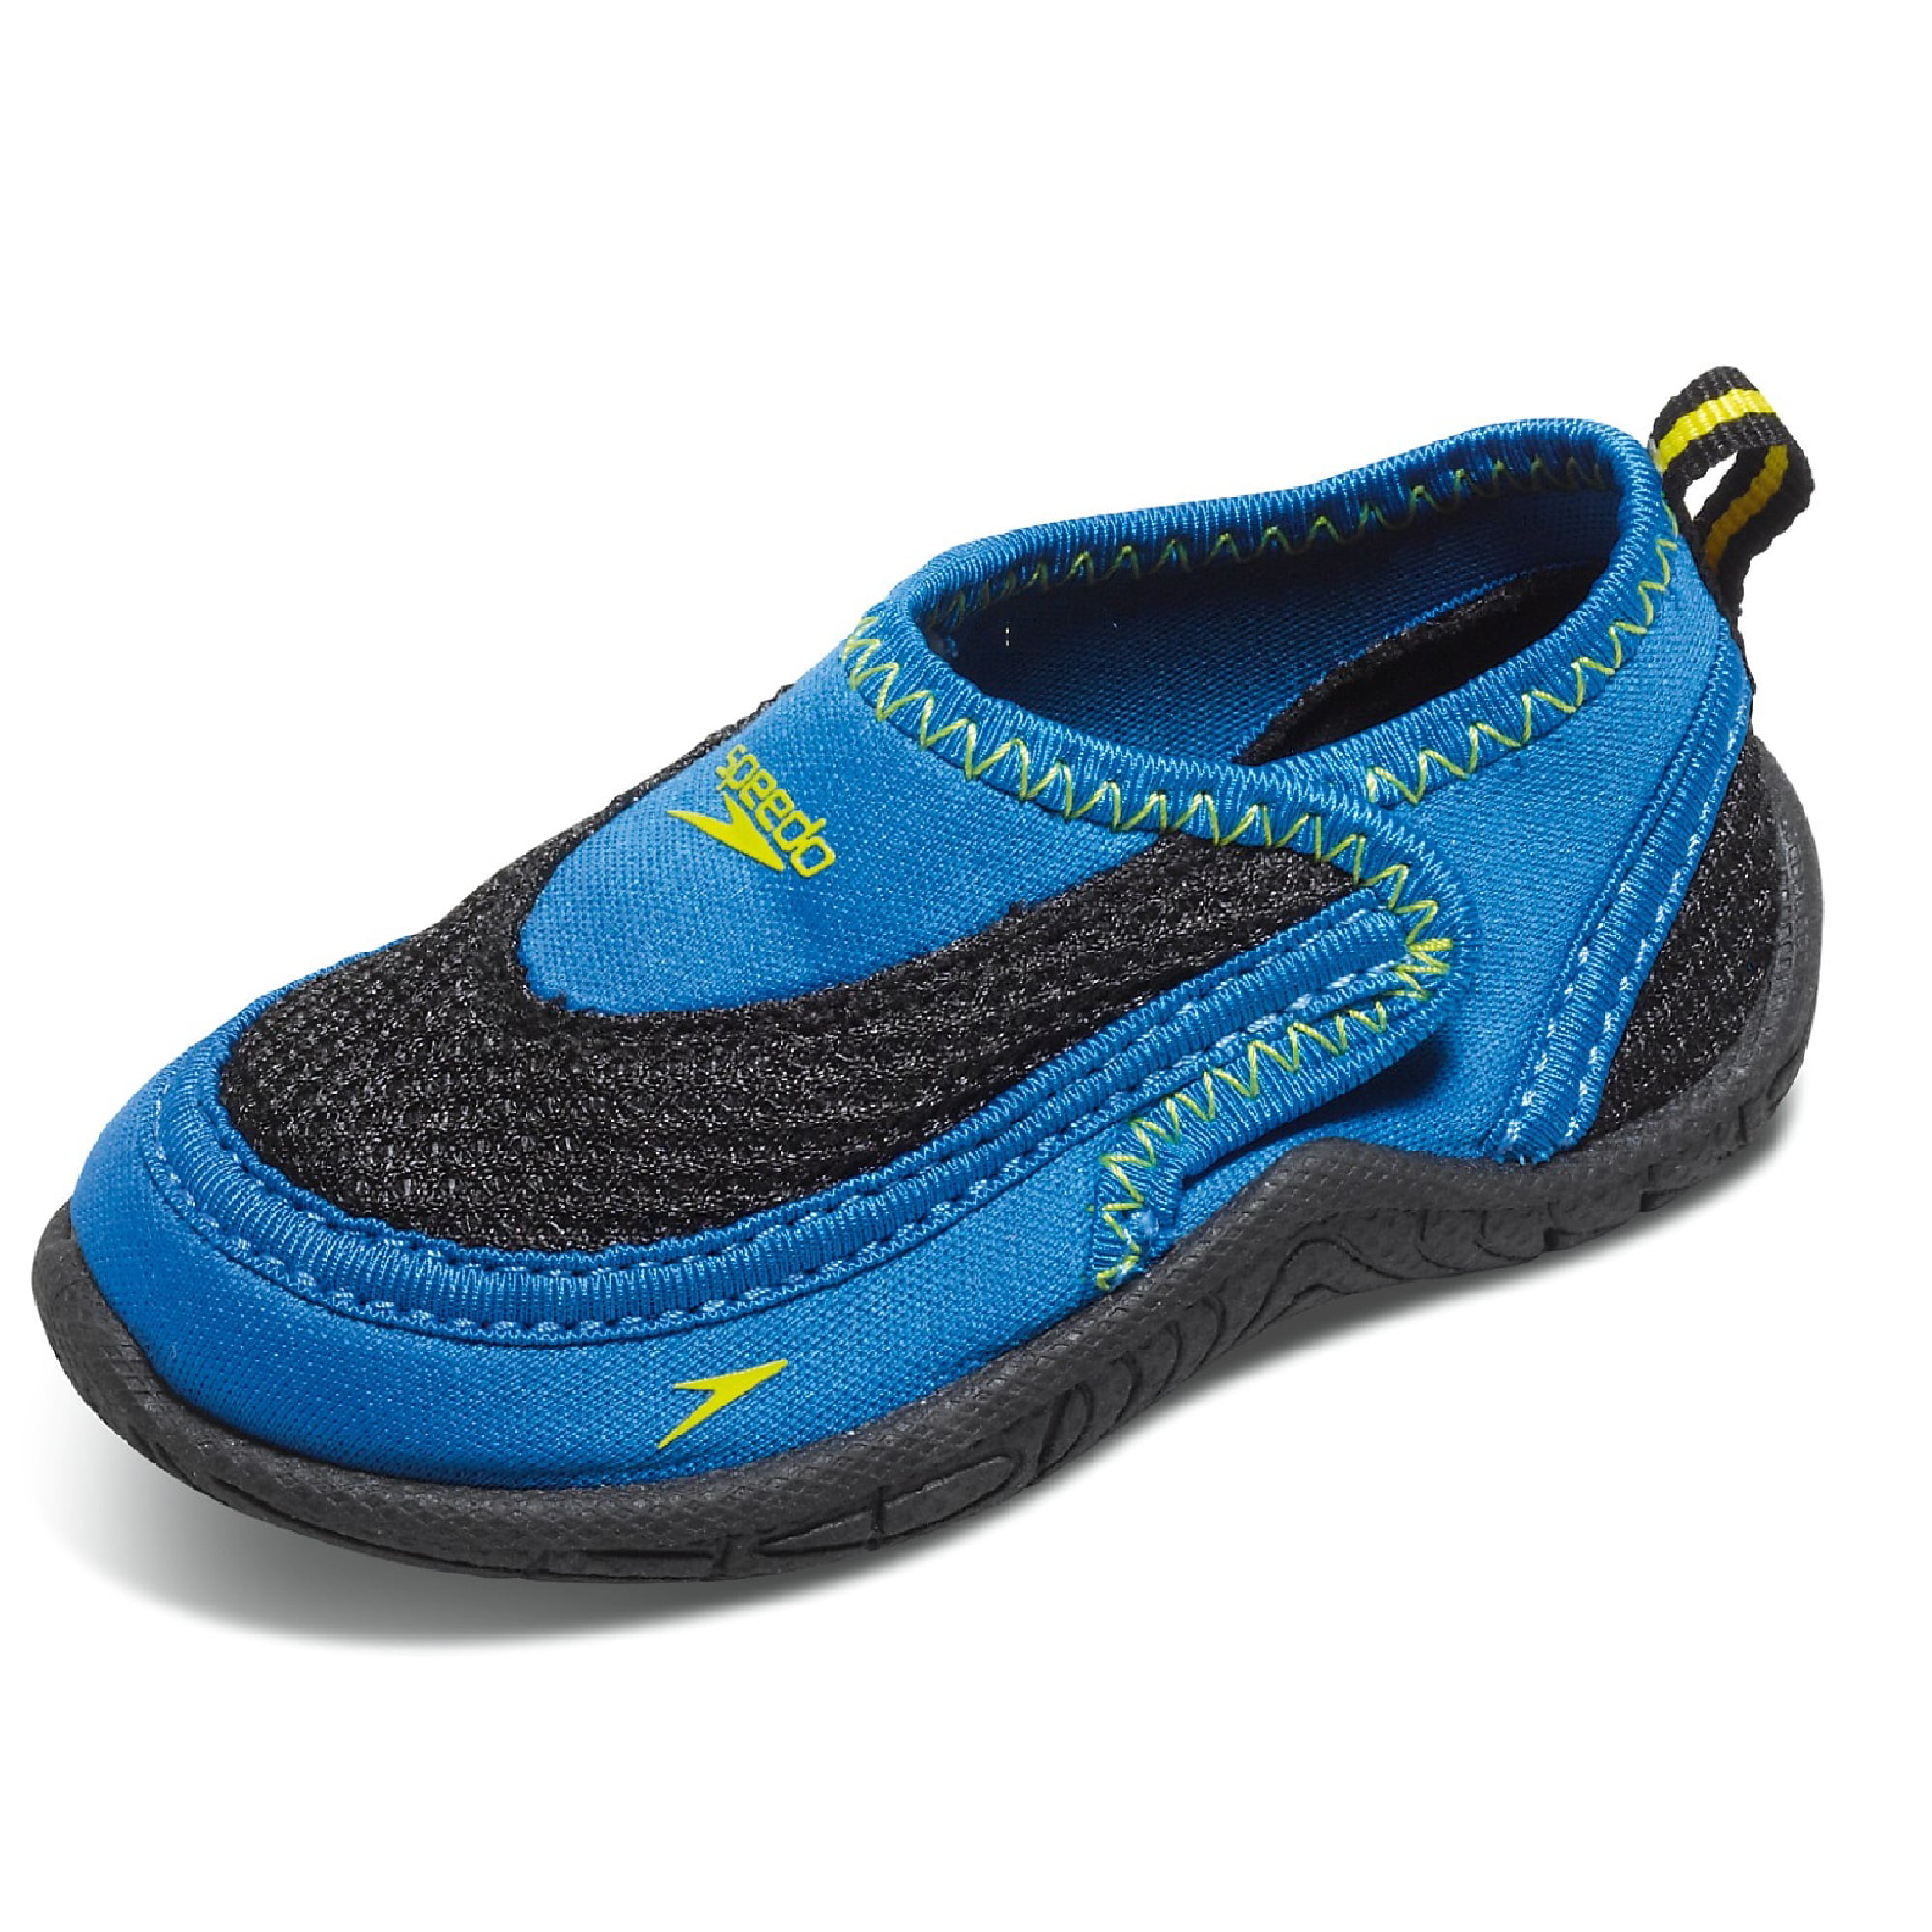 NEW Speedo Kids Toddler Boys Girls Black/Blue Surfwalker Beach Pool Water Shoes 